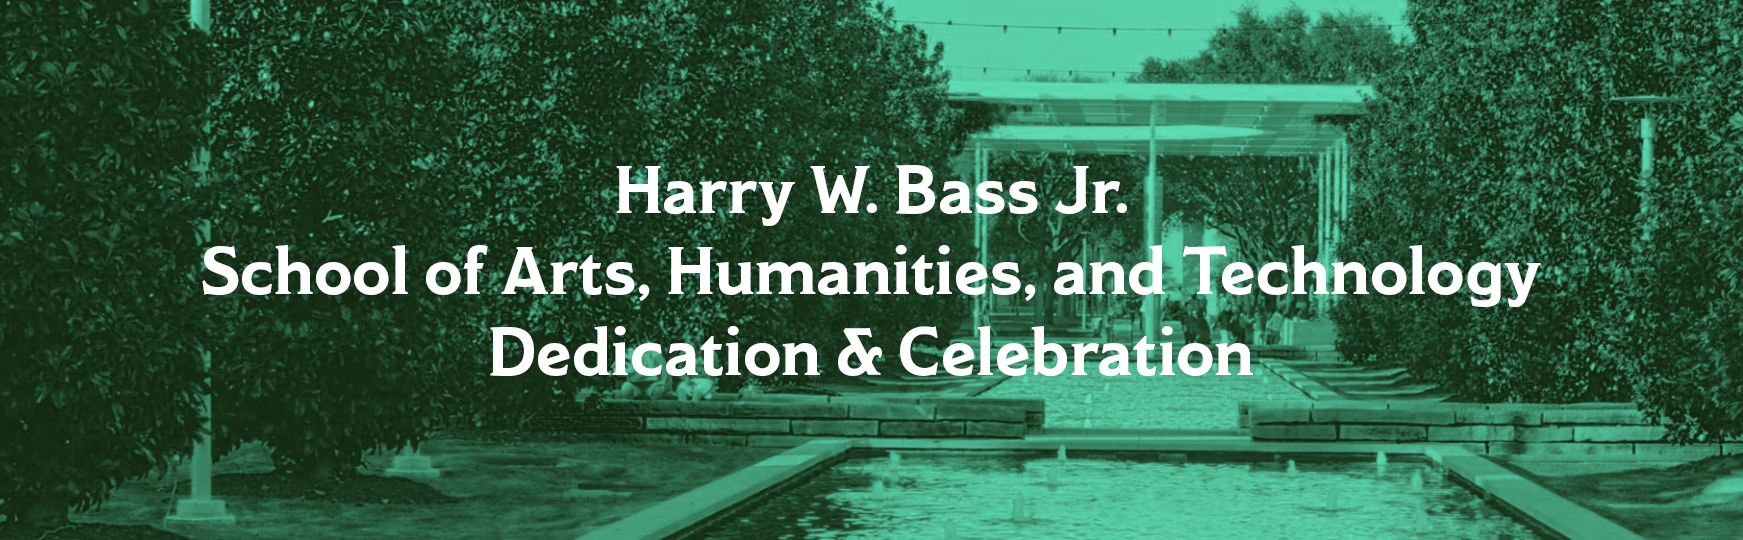 Harry W. Bass Jr. School of Arts, Humanities, and Technology Dedication & Celebration